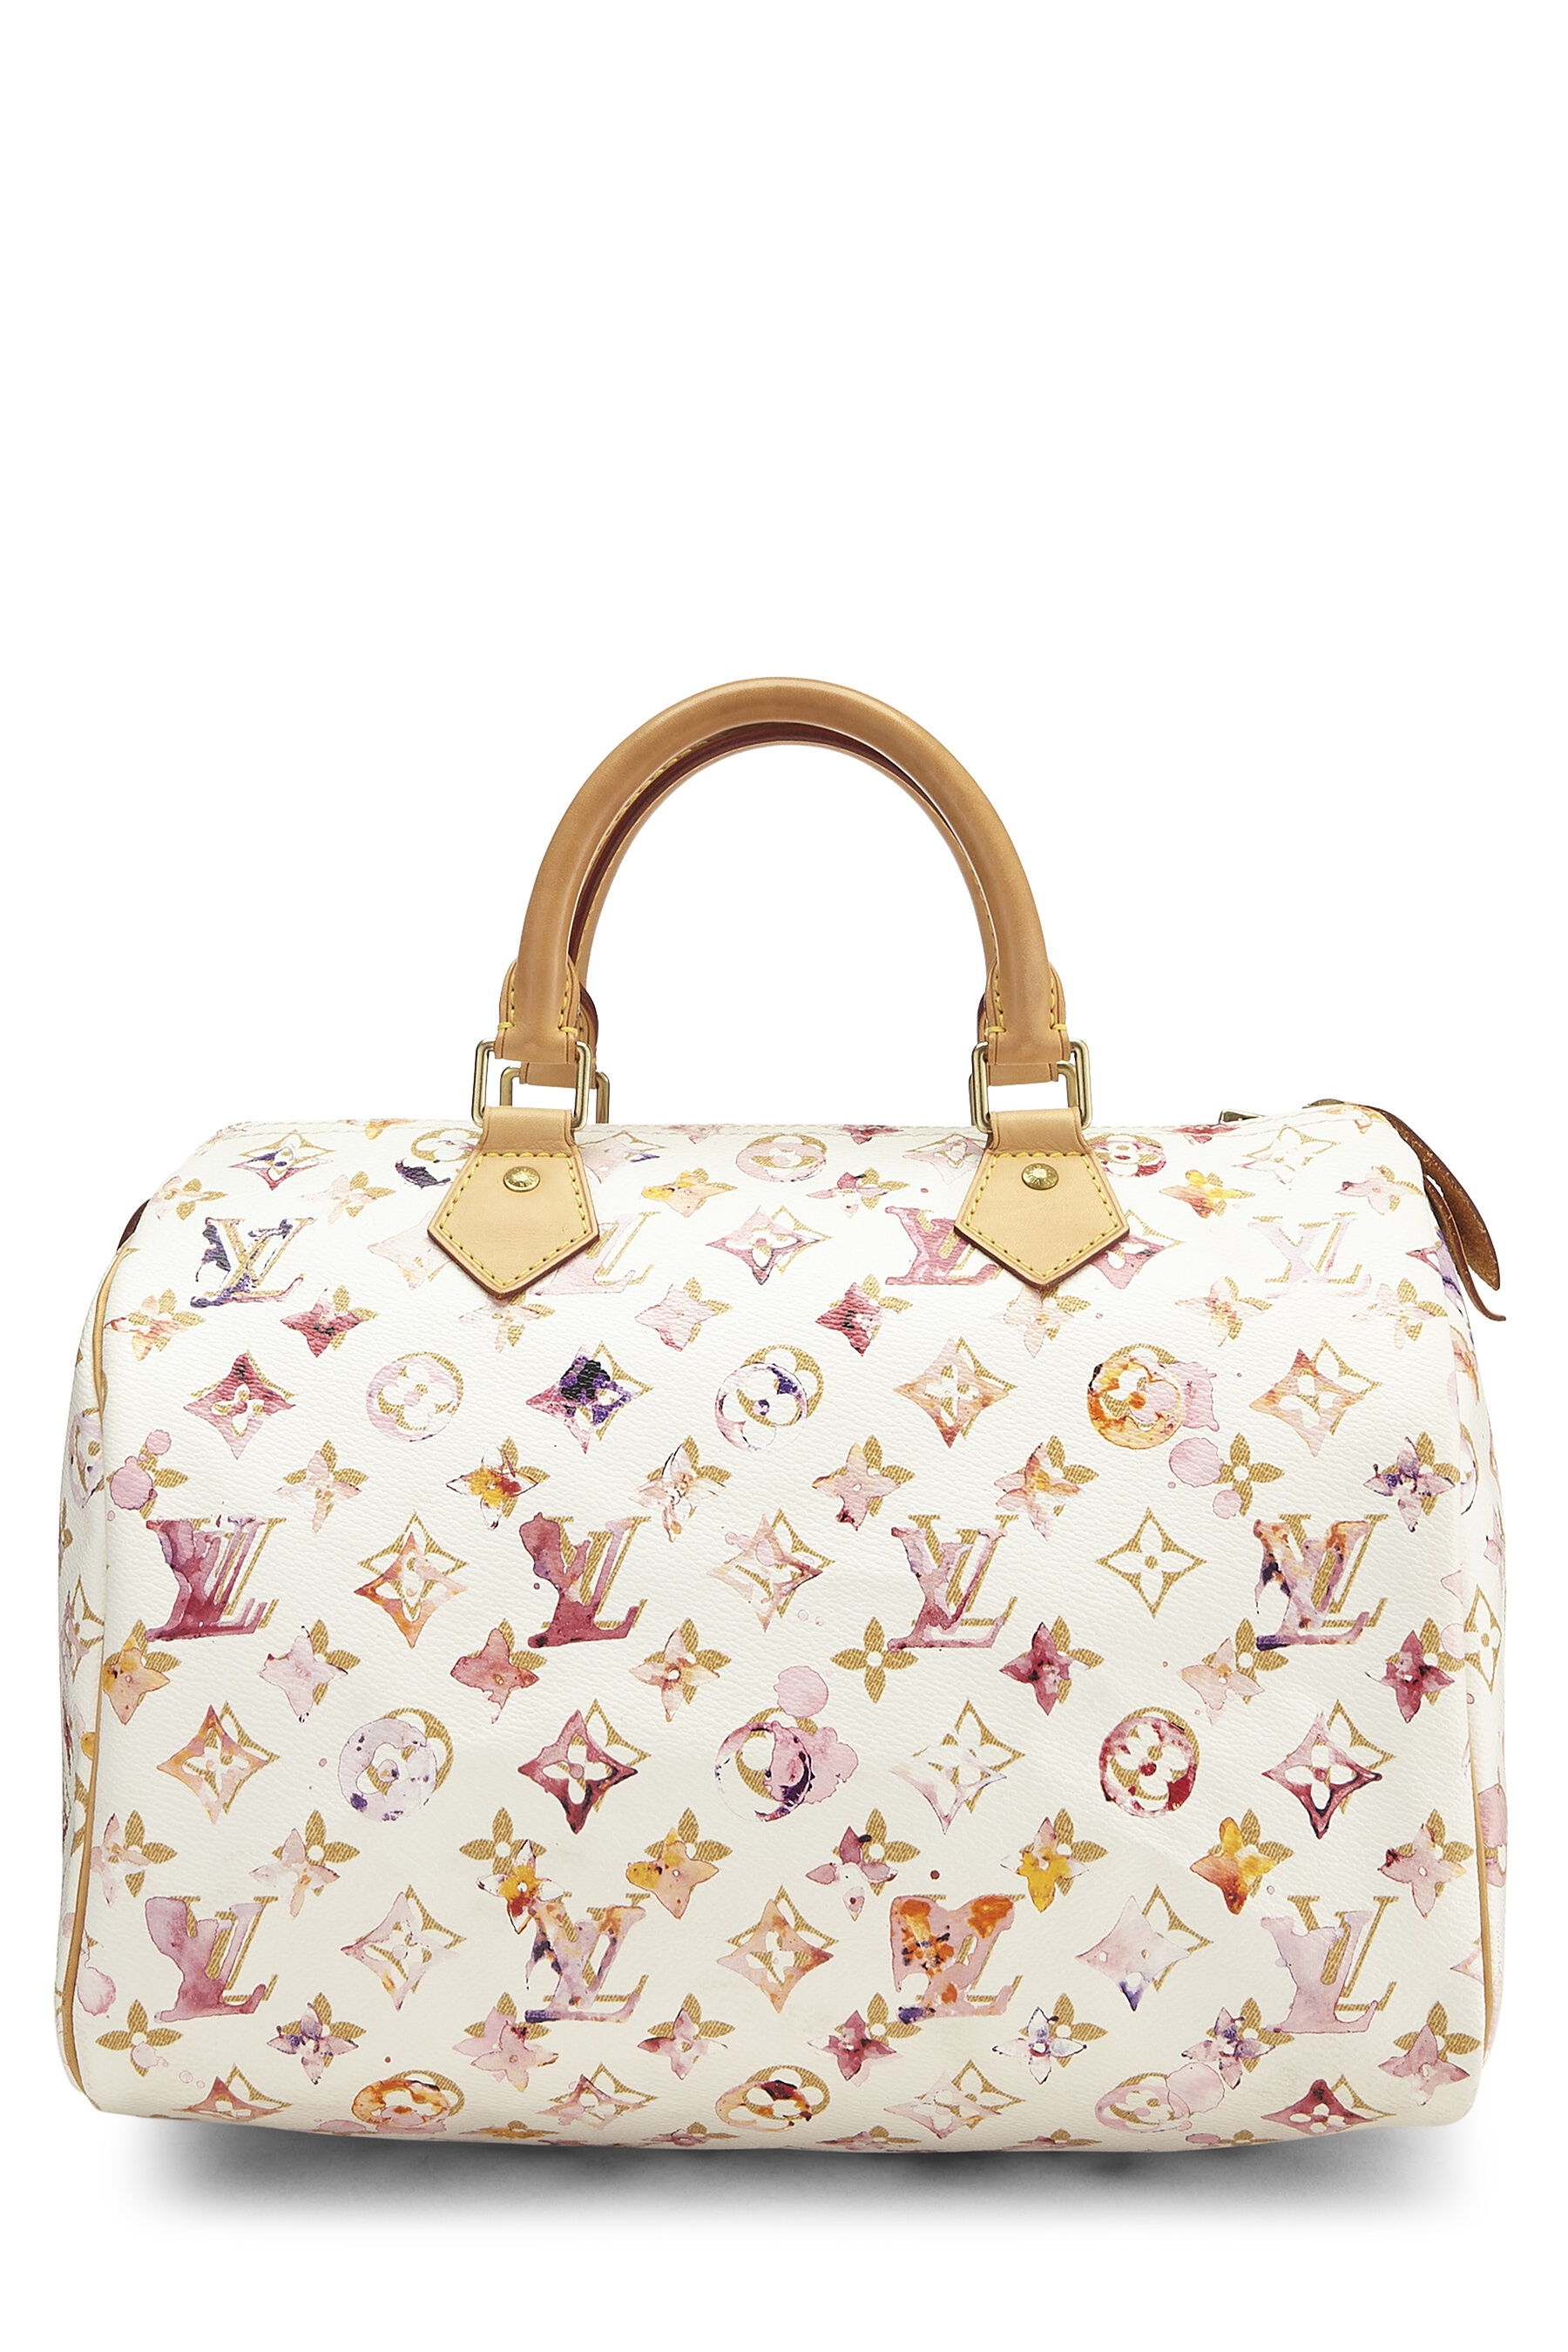 Louis Vuitton, Bags, Louis Vuitton Limited Edition Speedy Cube